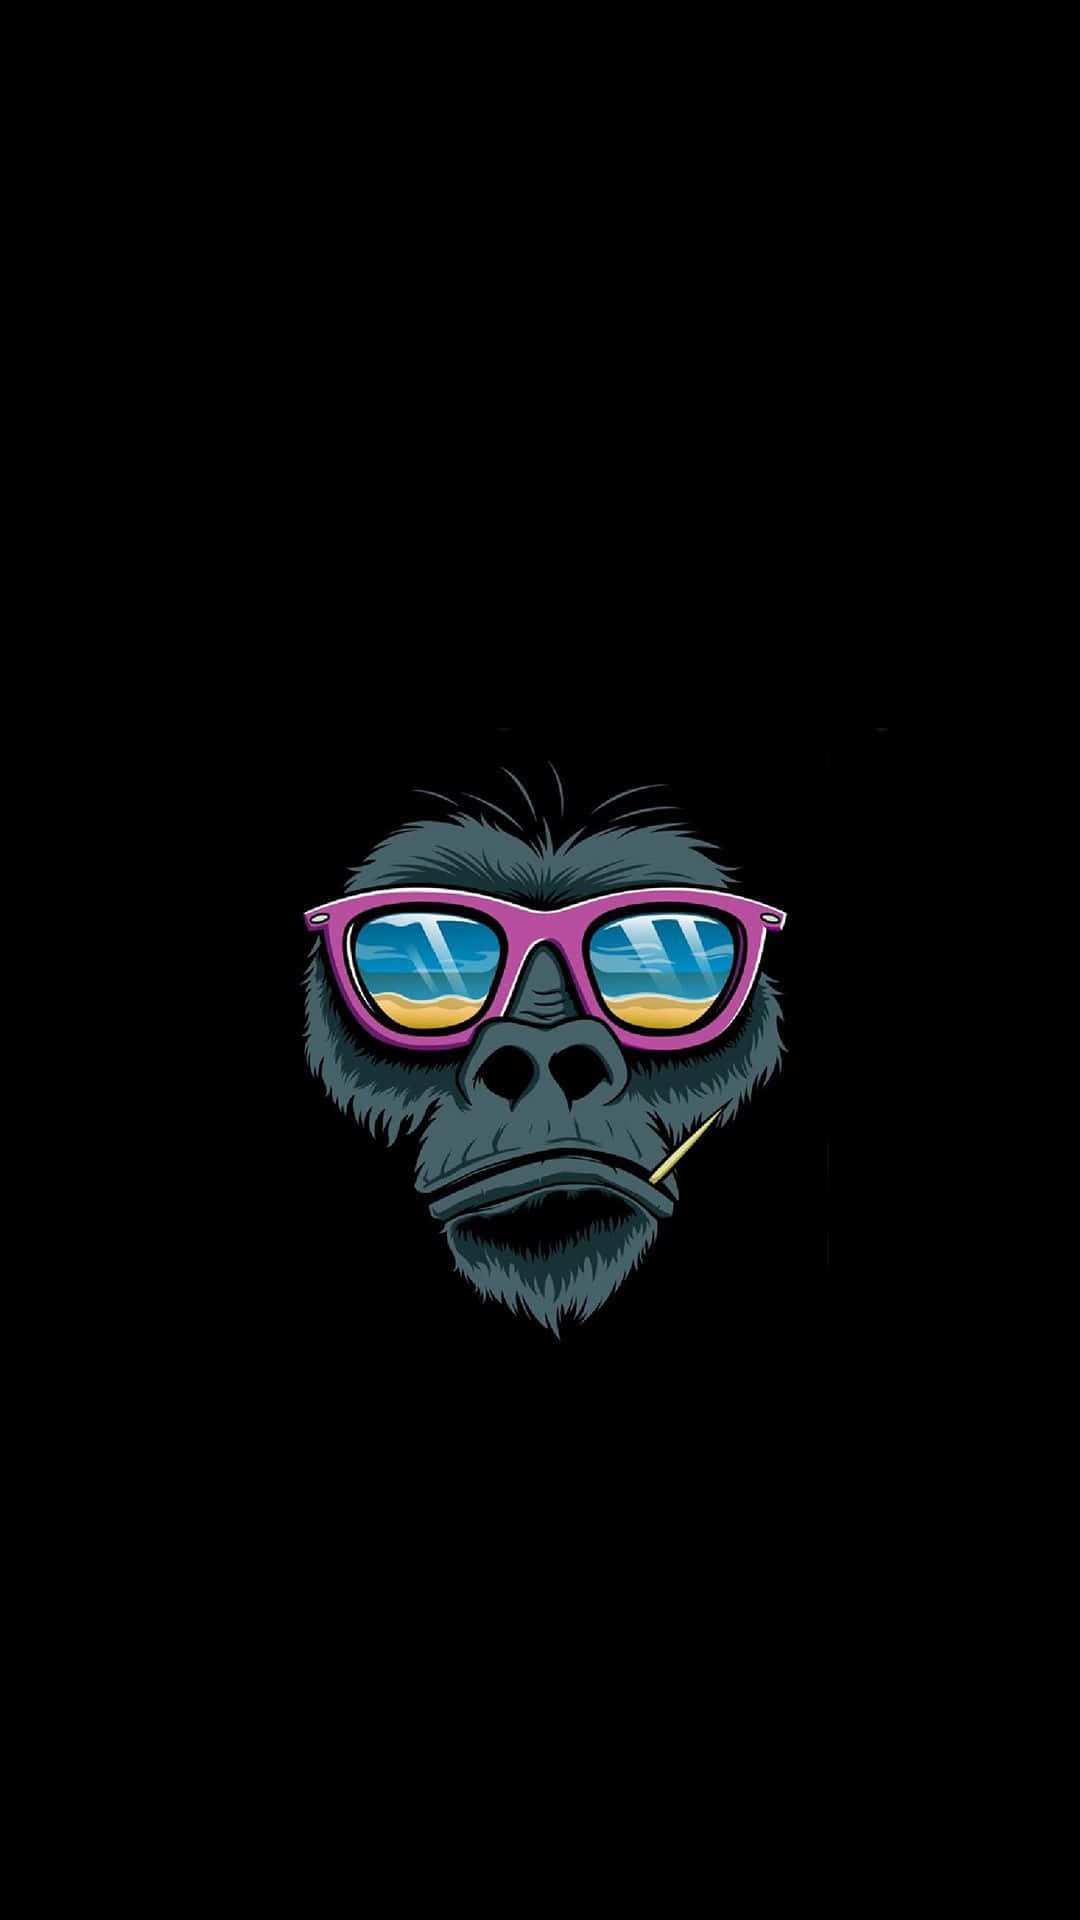 A Gorilla Wearing Sunglasses On A Black Background Wallpaper